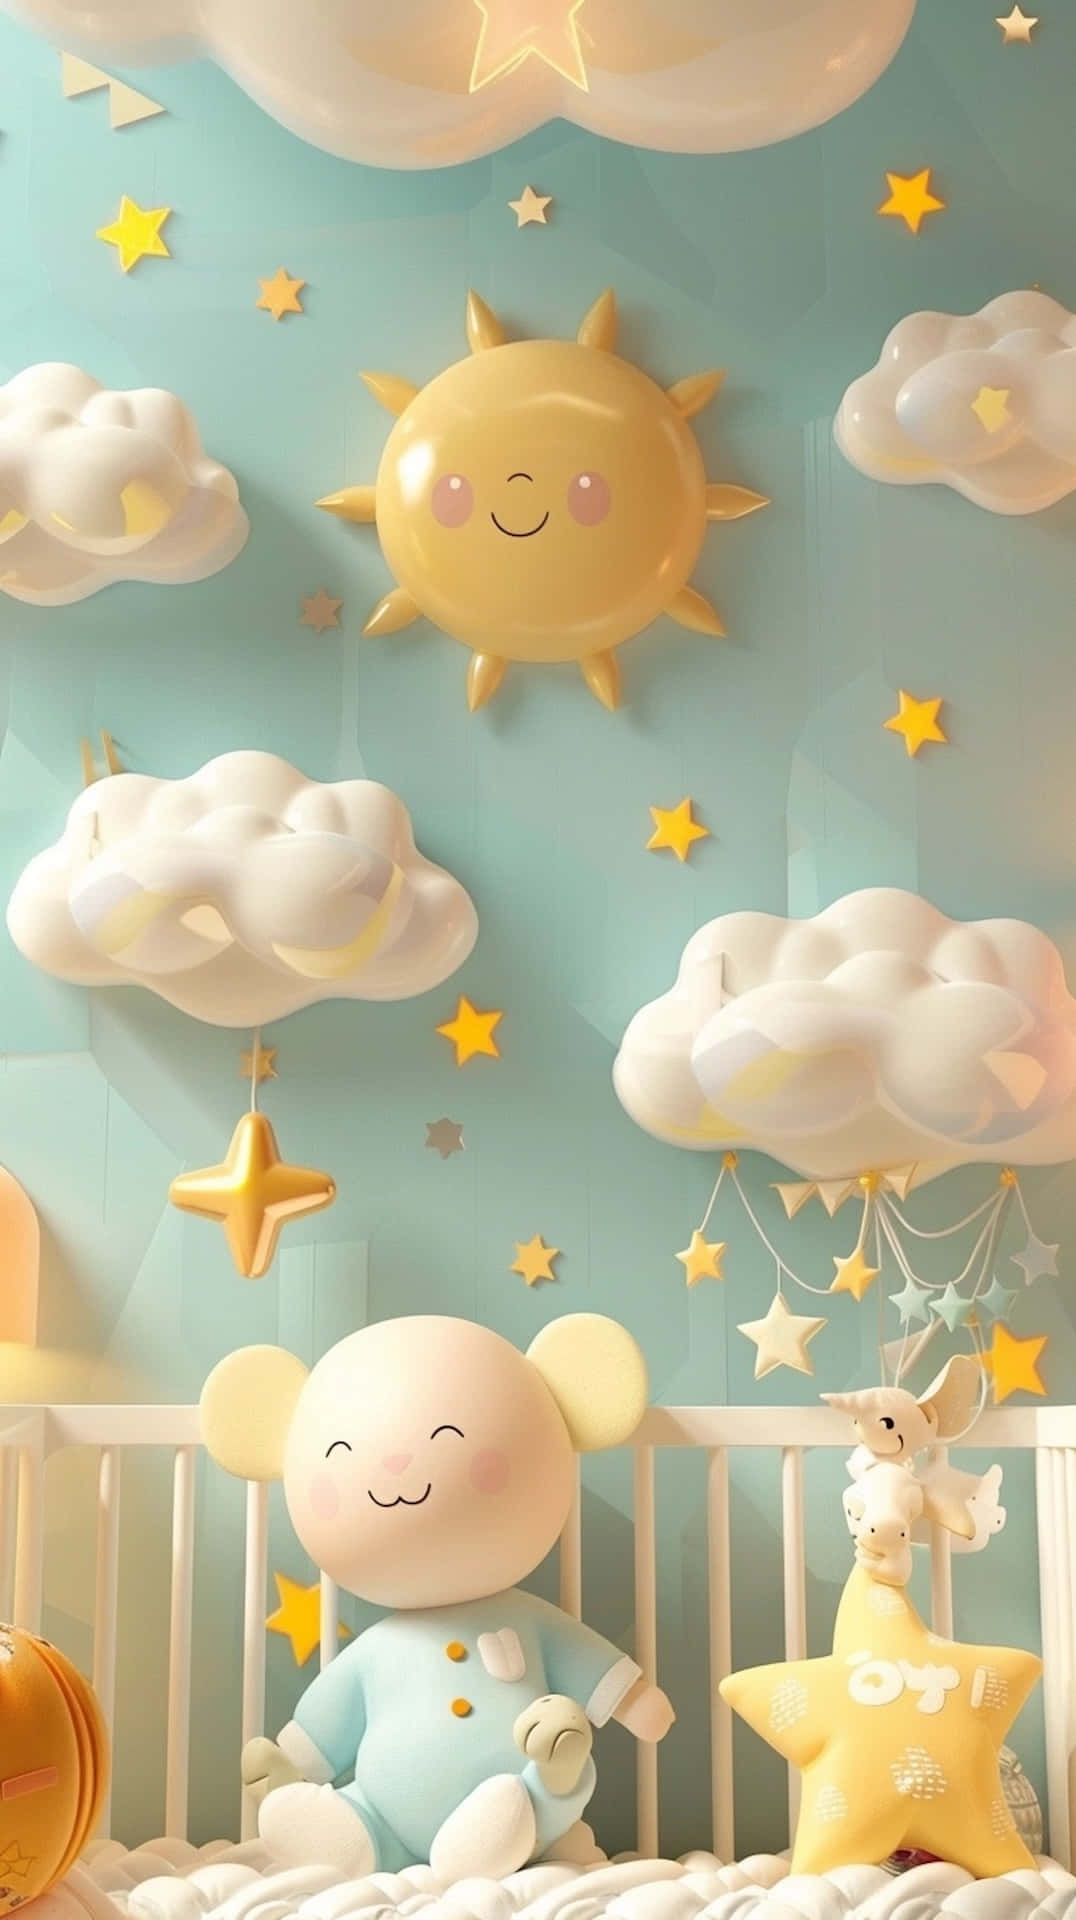 Whimsical Nursery Decorwith Celestial Theme Wallpaper